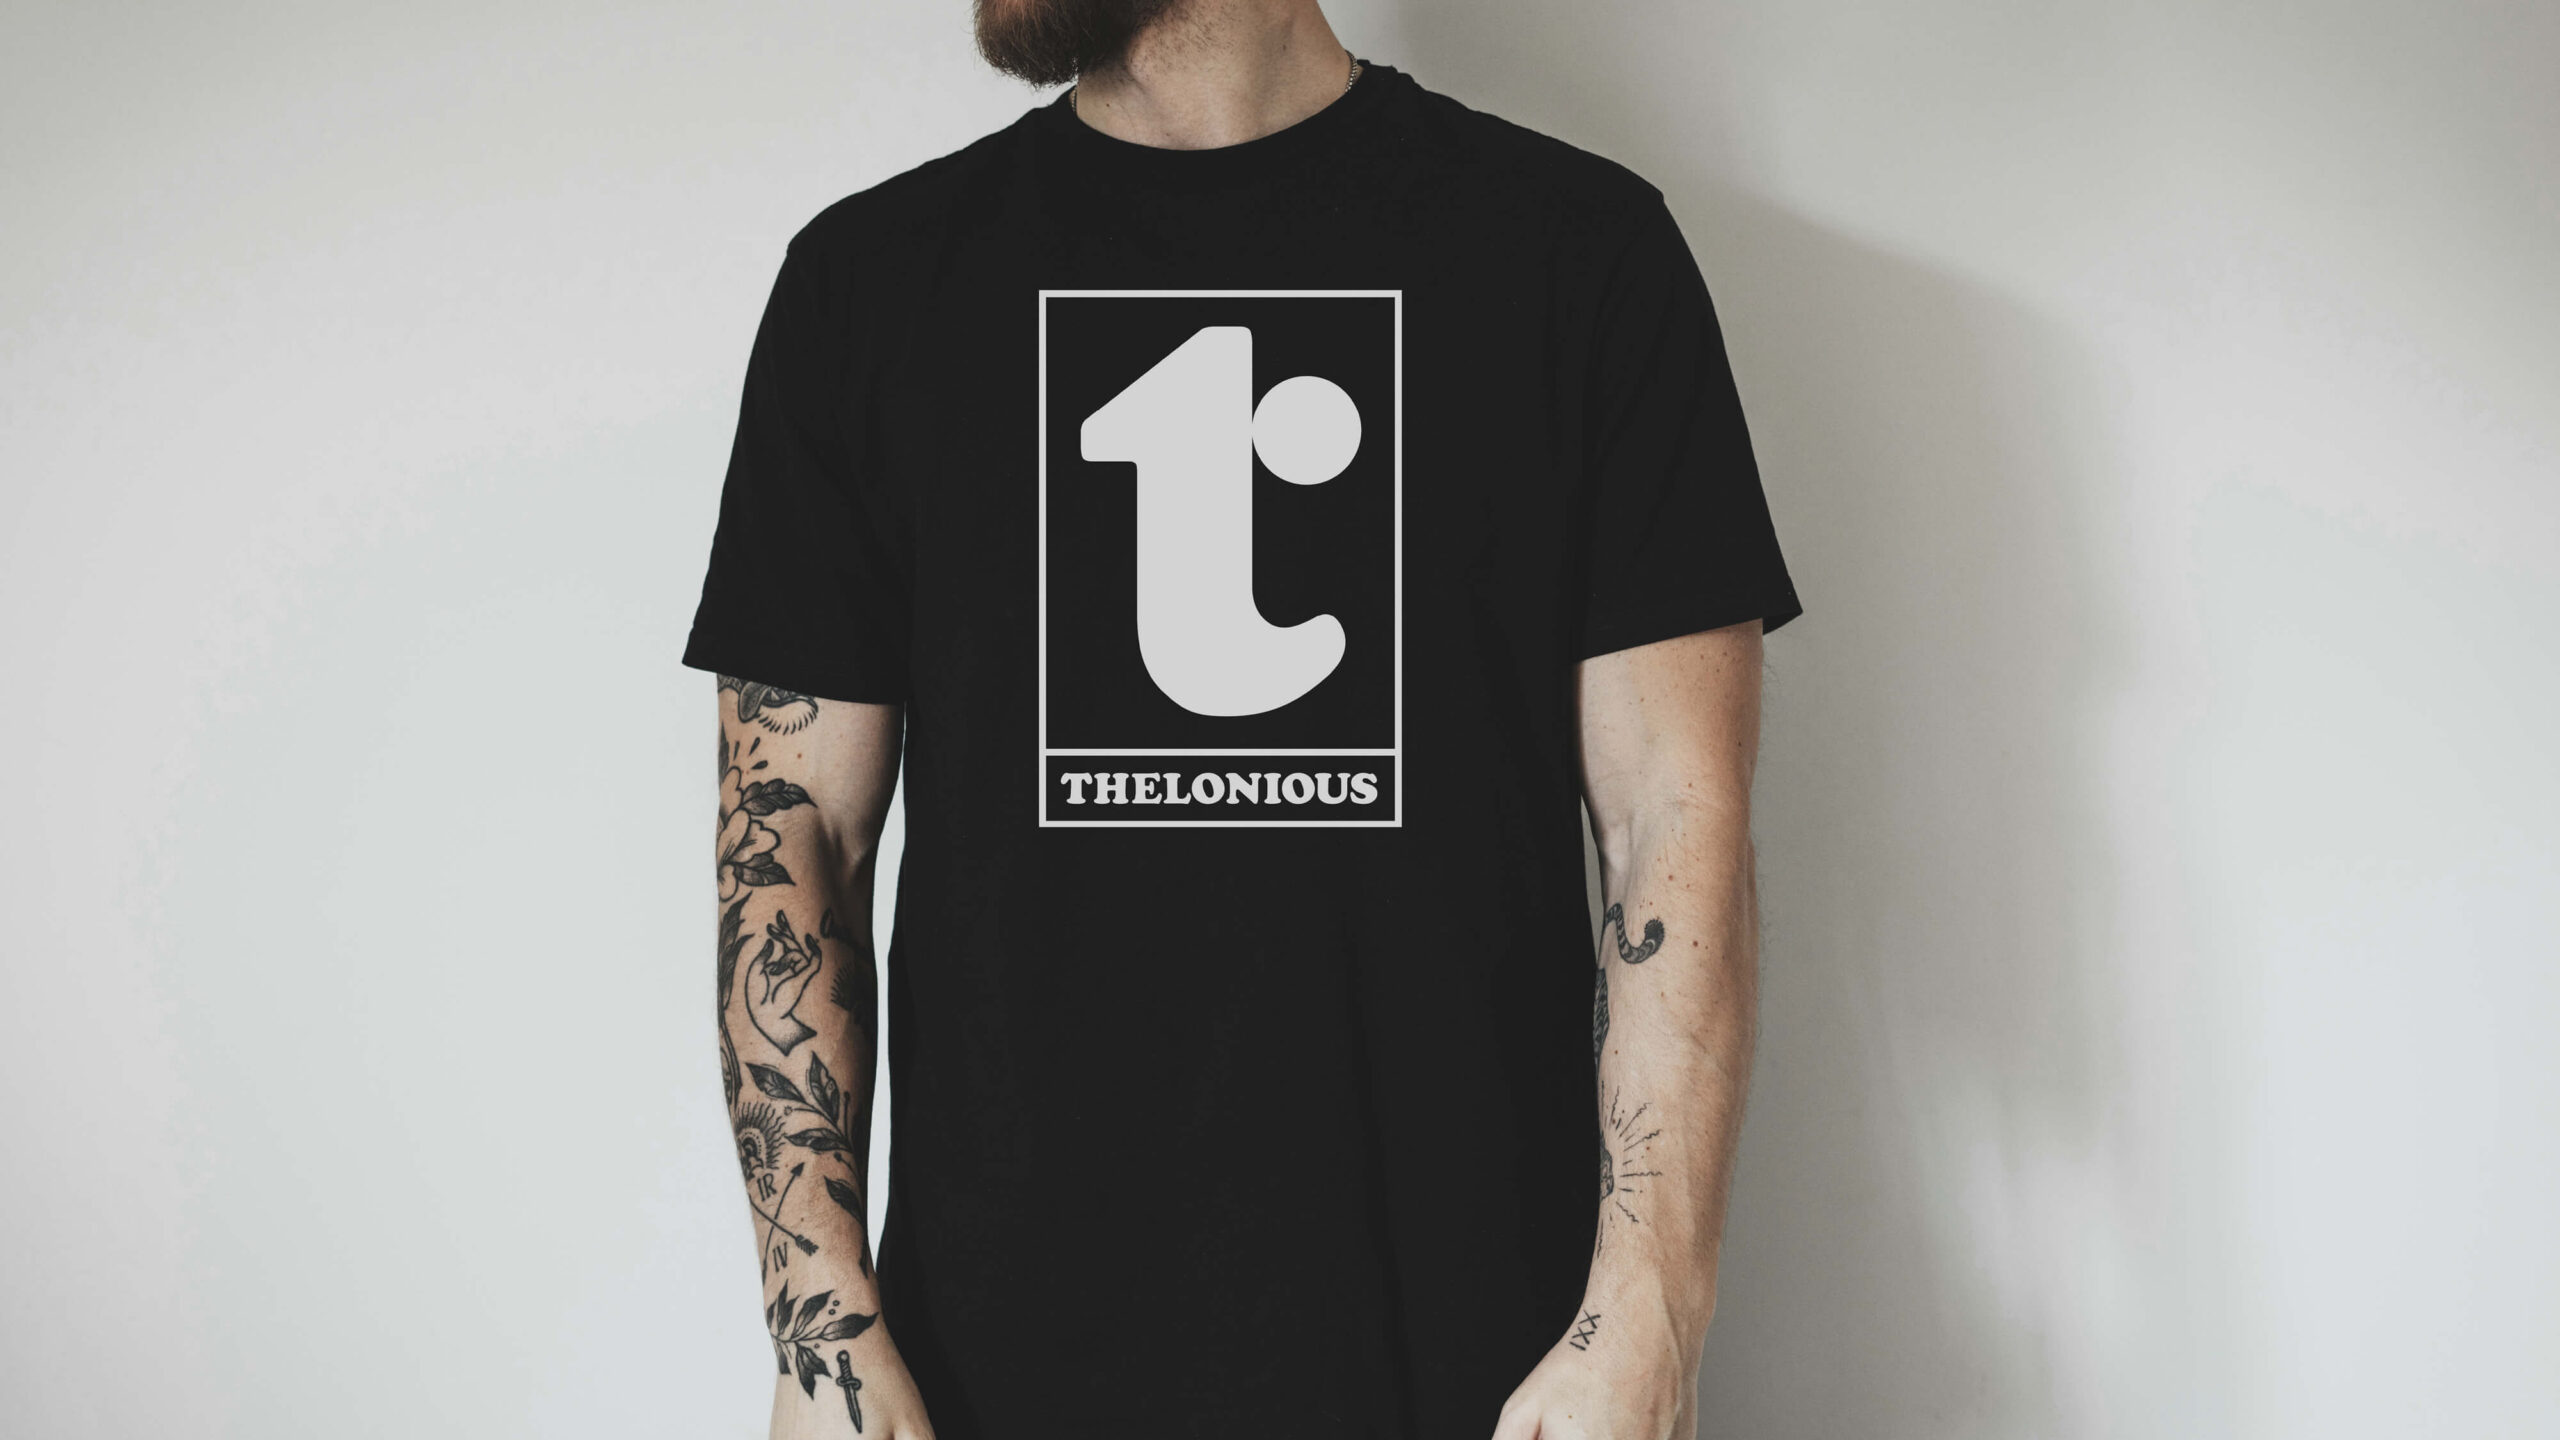 Thelonious Records: visual branding